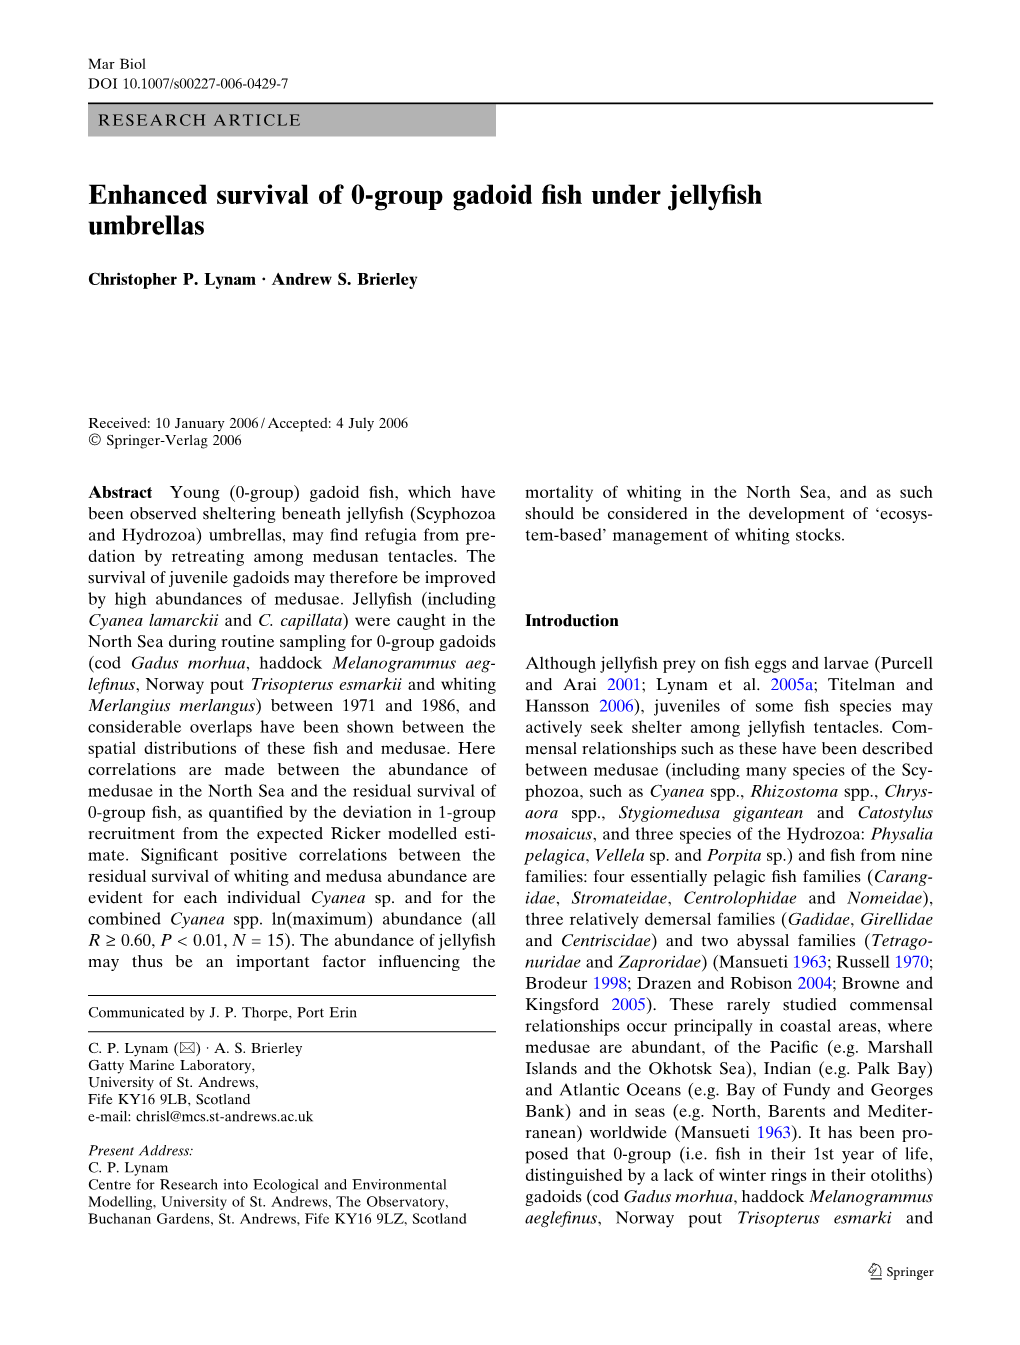 Enhanced Survival of 0-Group Gadoid Fish Under Jellyfish Umbrellas